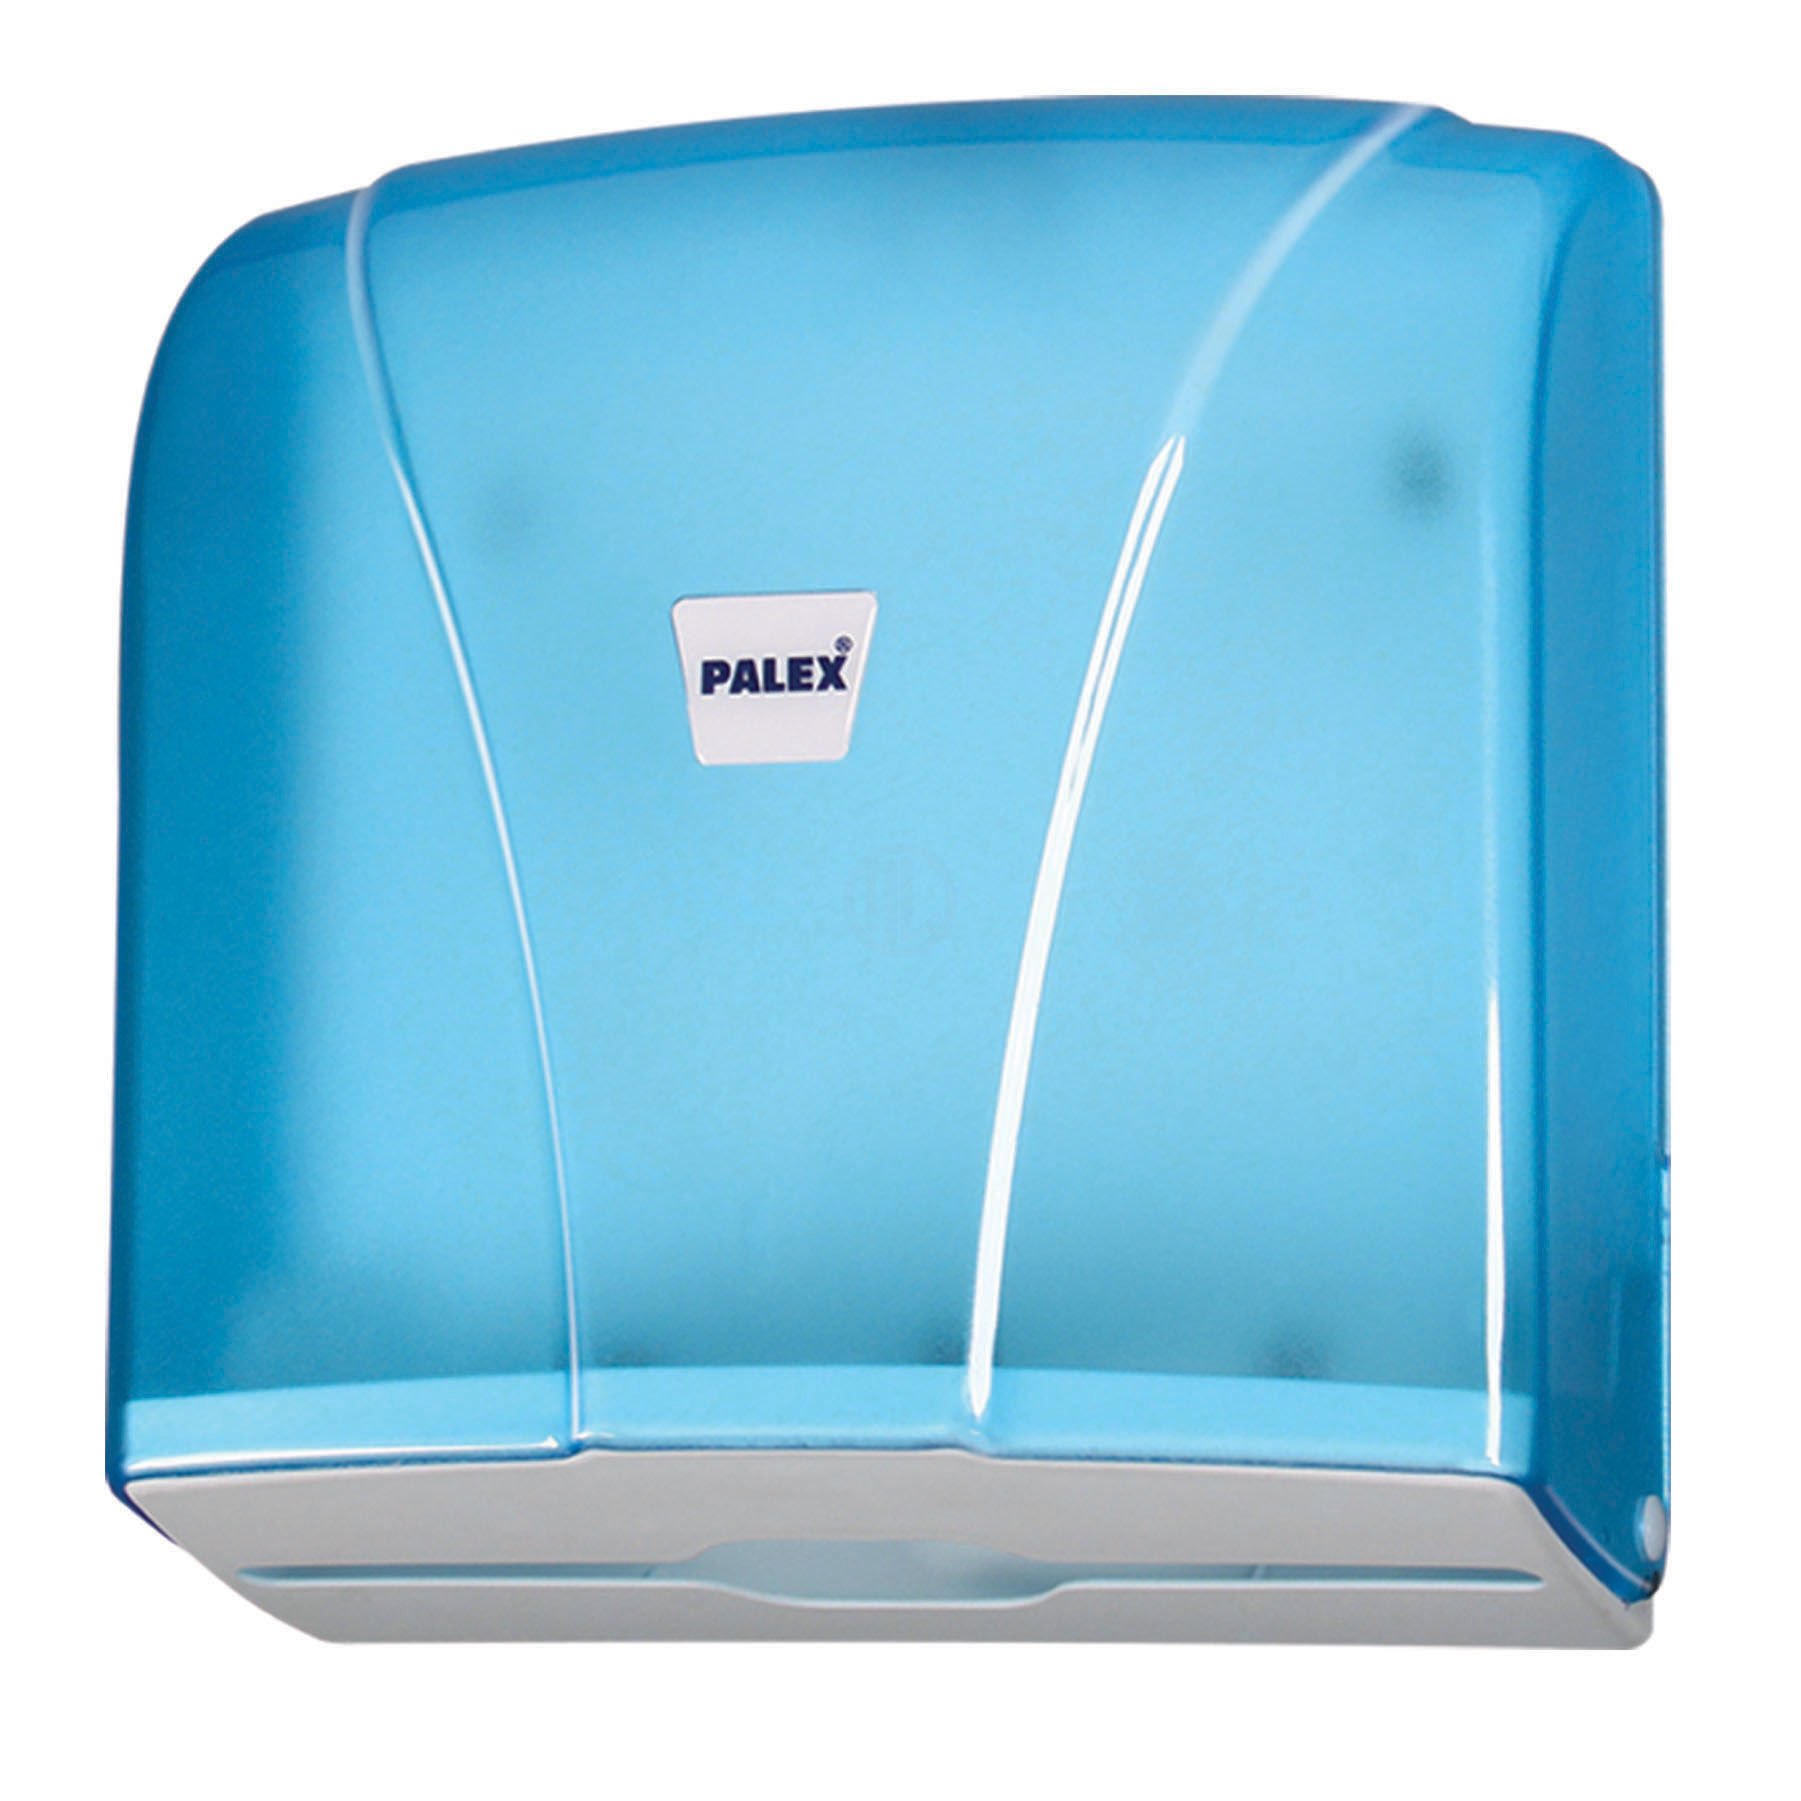 Palex Z Katlı Kağıt Havlu Dispenseri Şeffaf Mavi - 3464-1